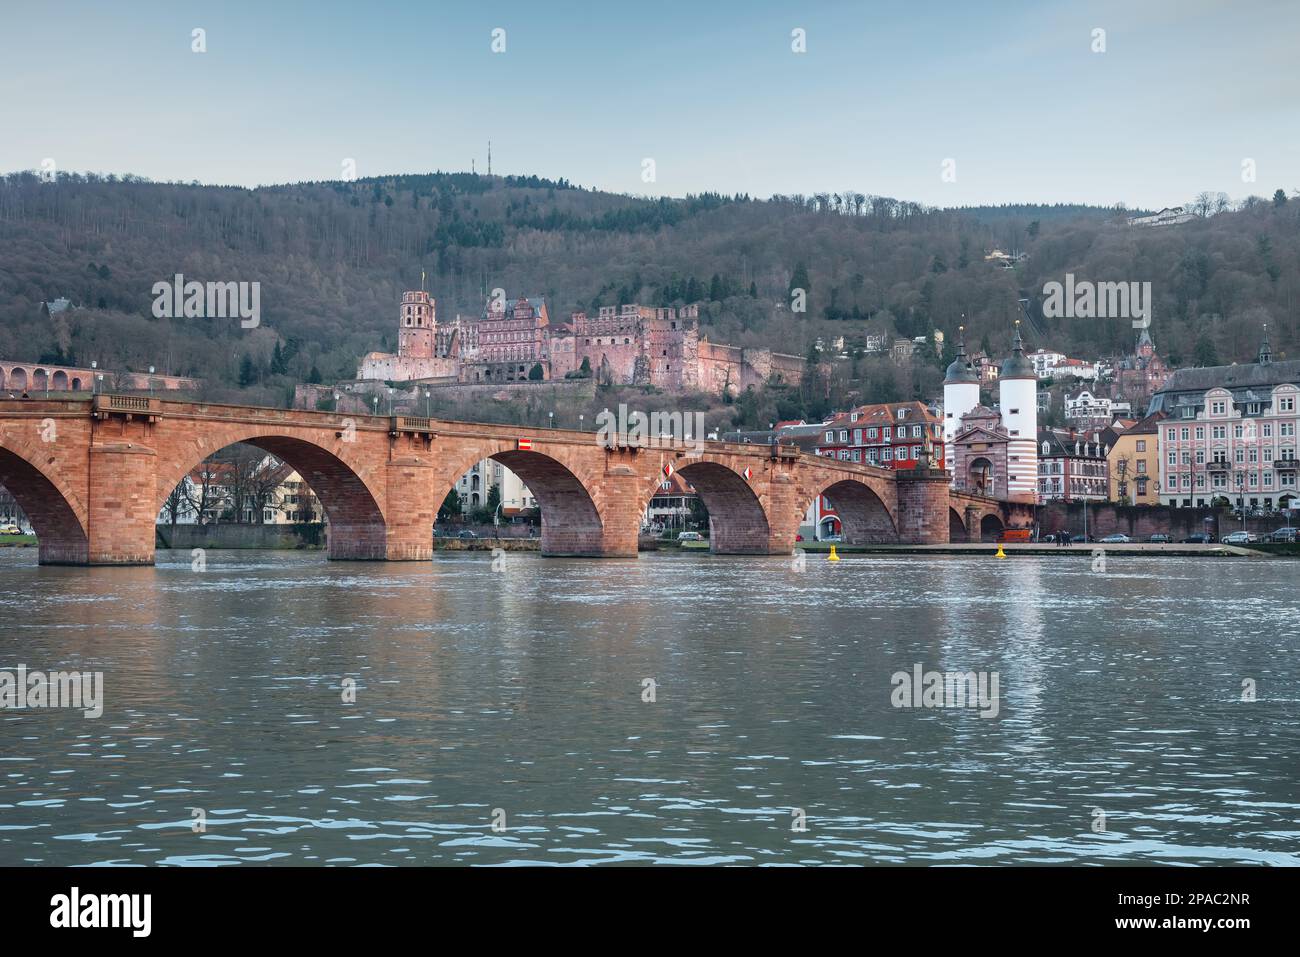 Neckar river, Old Bridge (Alte Brucke) and Heidelberg Castle - Heidelberg, Germany Stock Photo